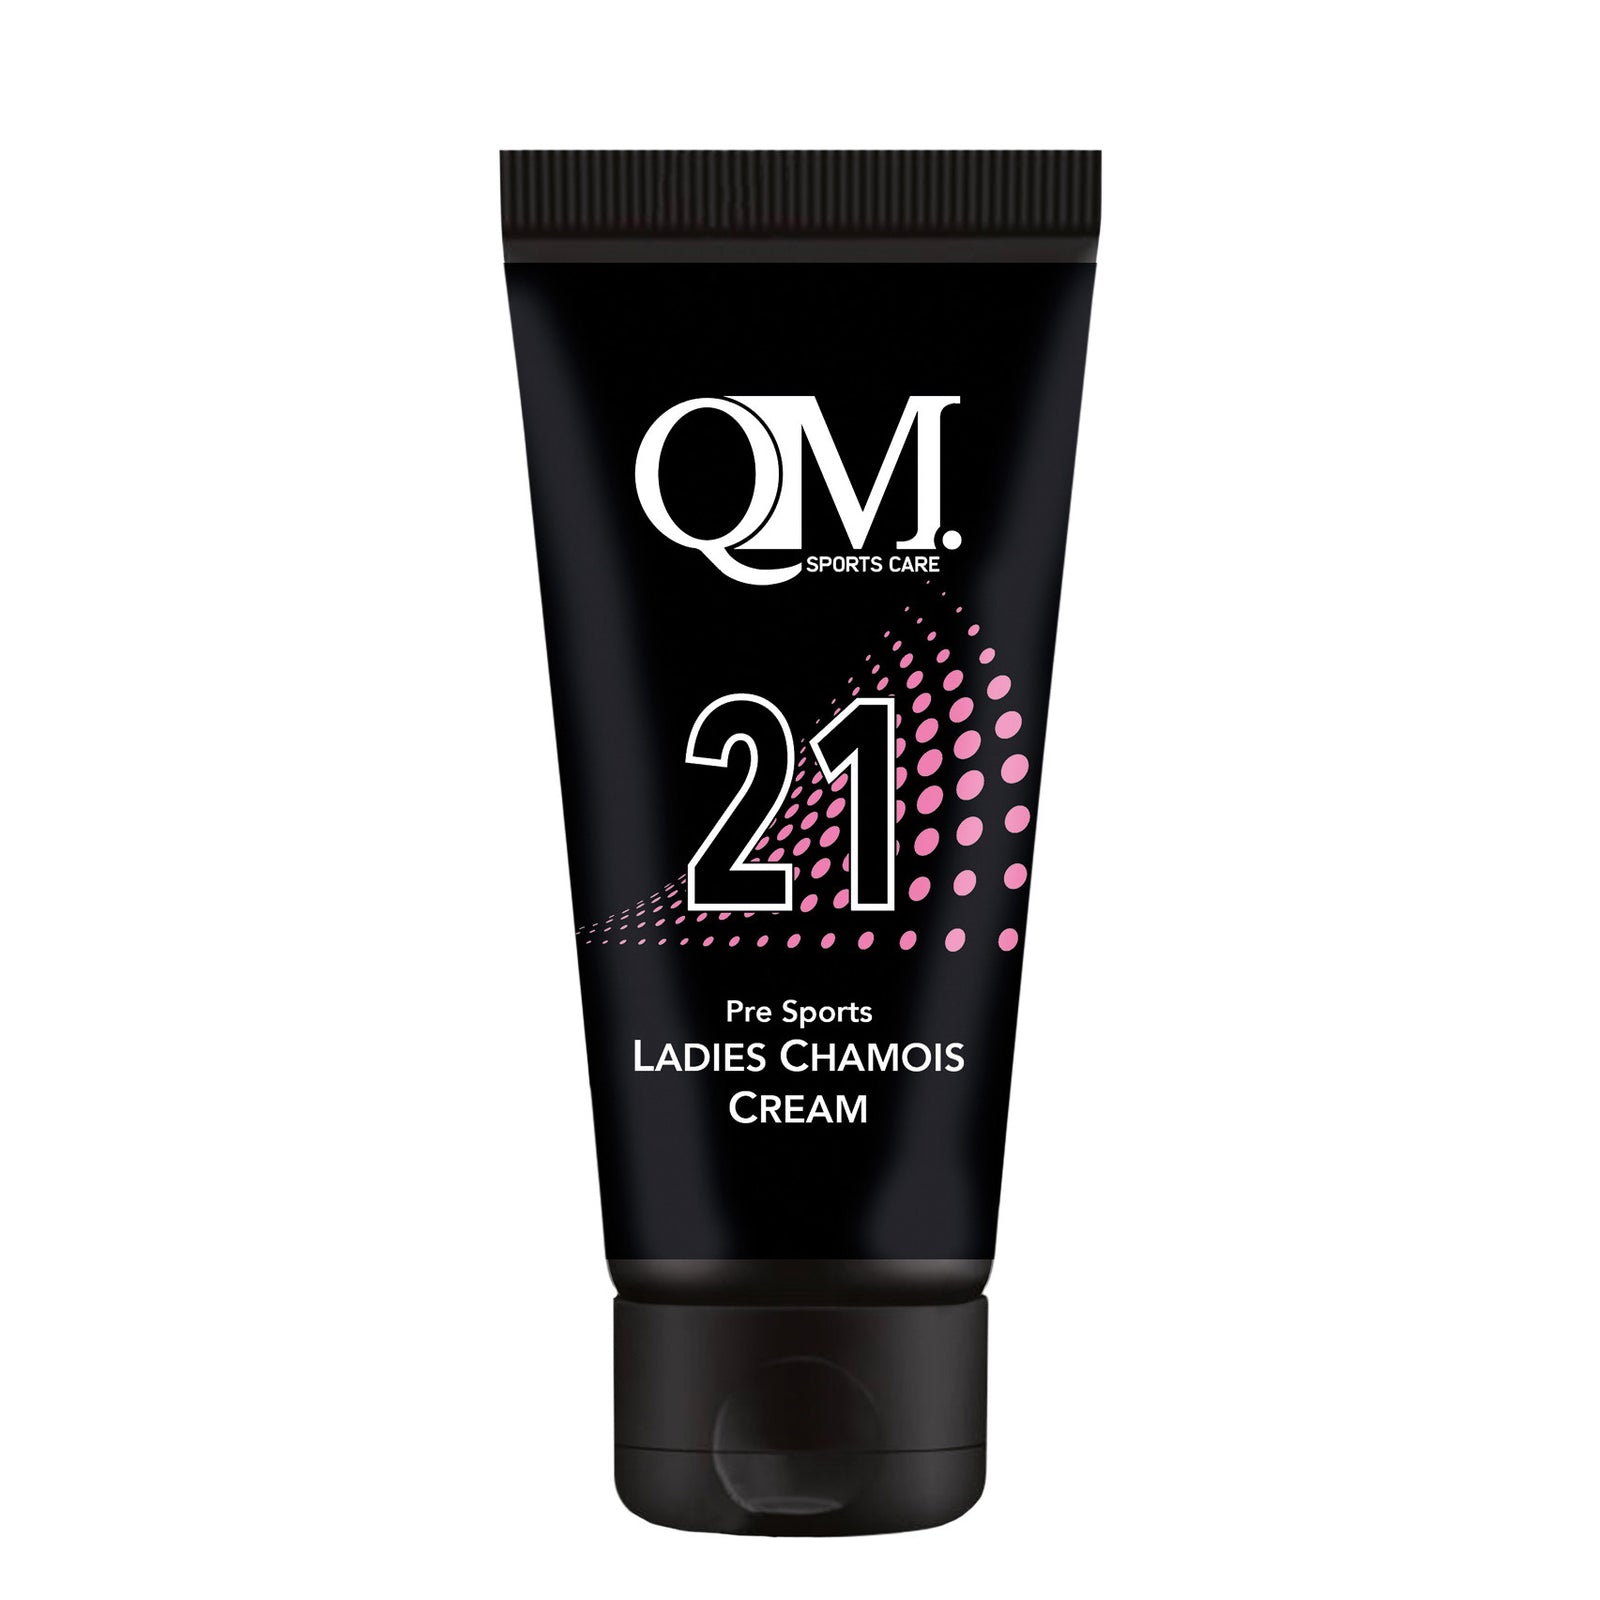 QM Sports Care 21 ladies chamois cream tube 150ml